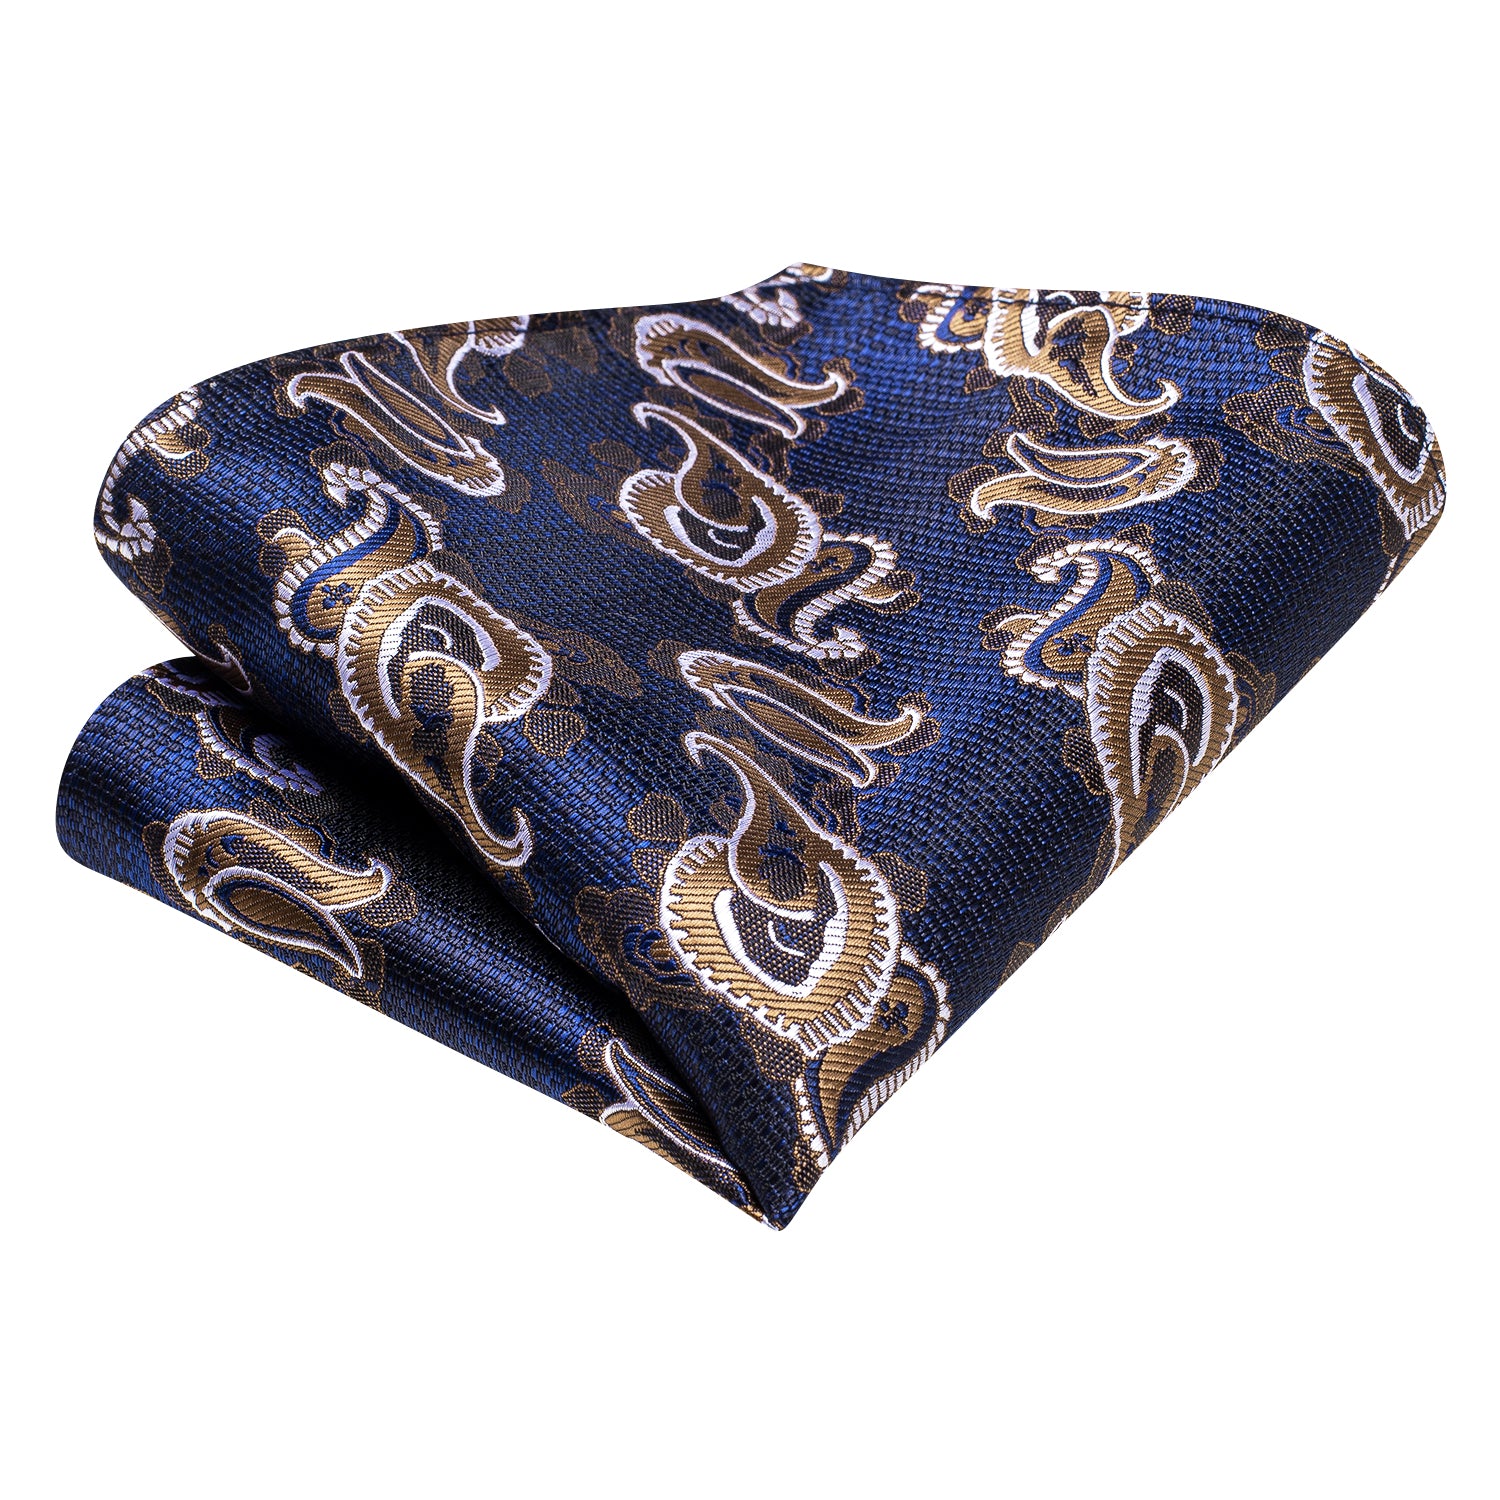 Blue Champagne Paisley Silk Ascot Tie Pocket Square Cufflinks Set